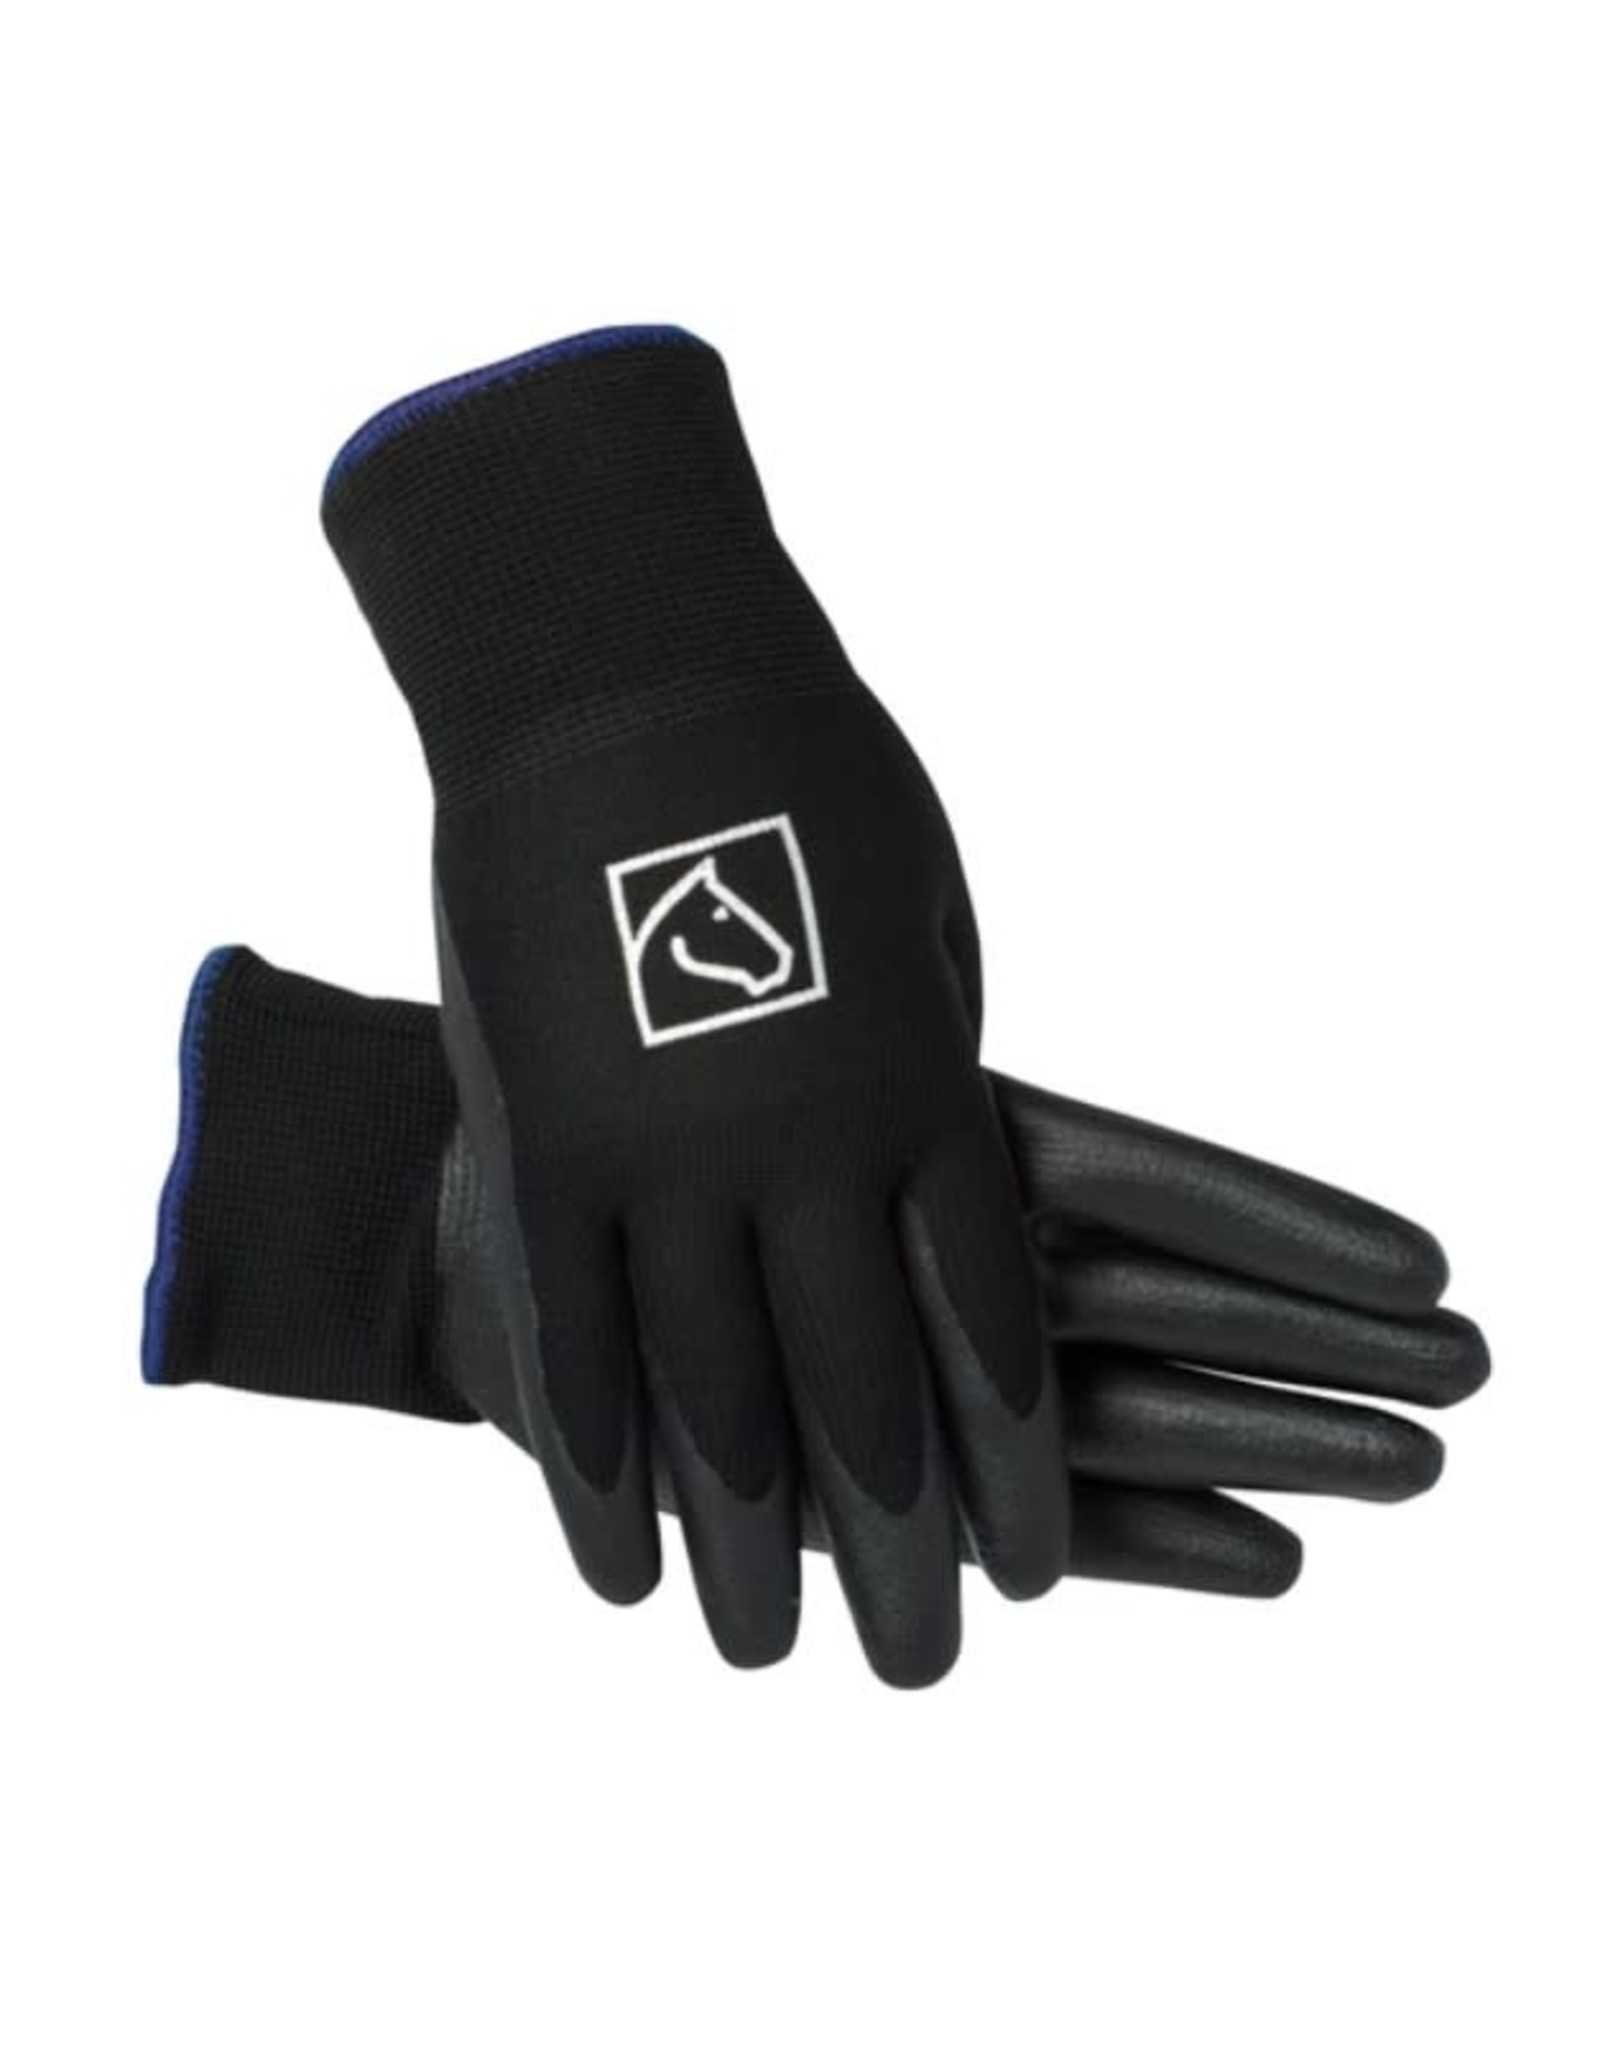 SSG Gloves SSG Equestrian Barn Glove Black